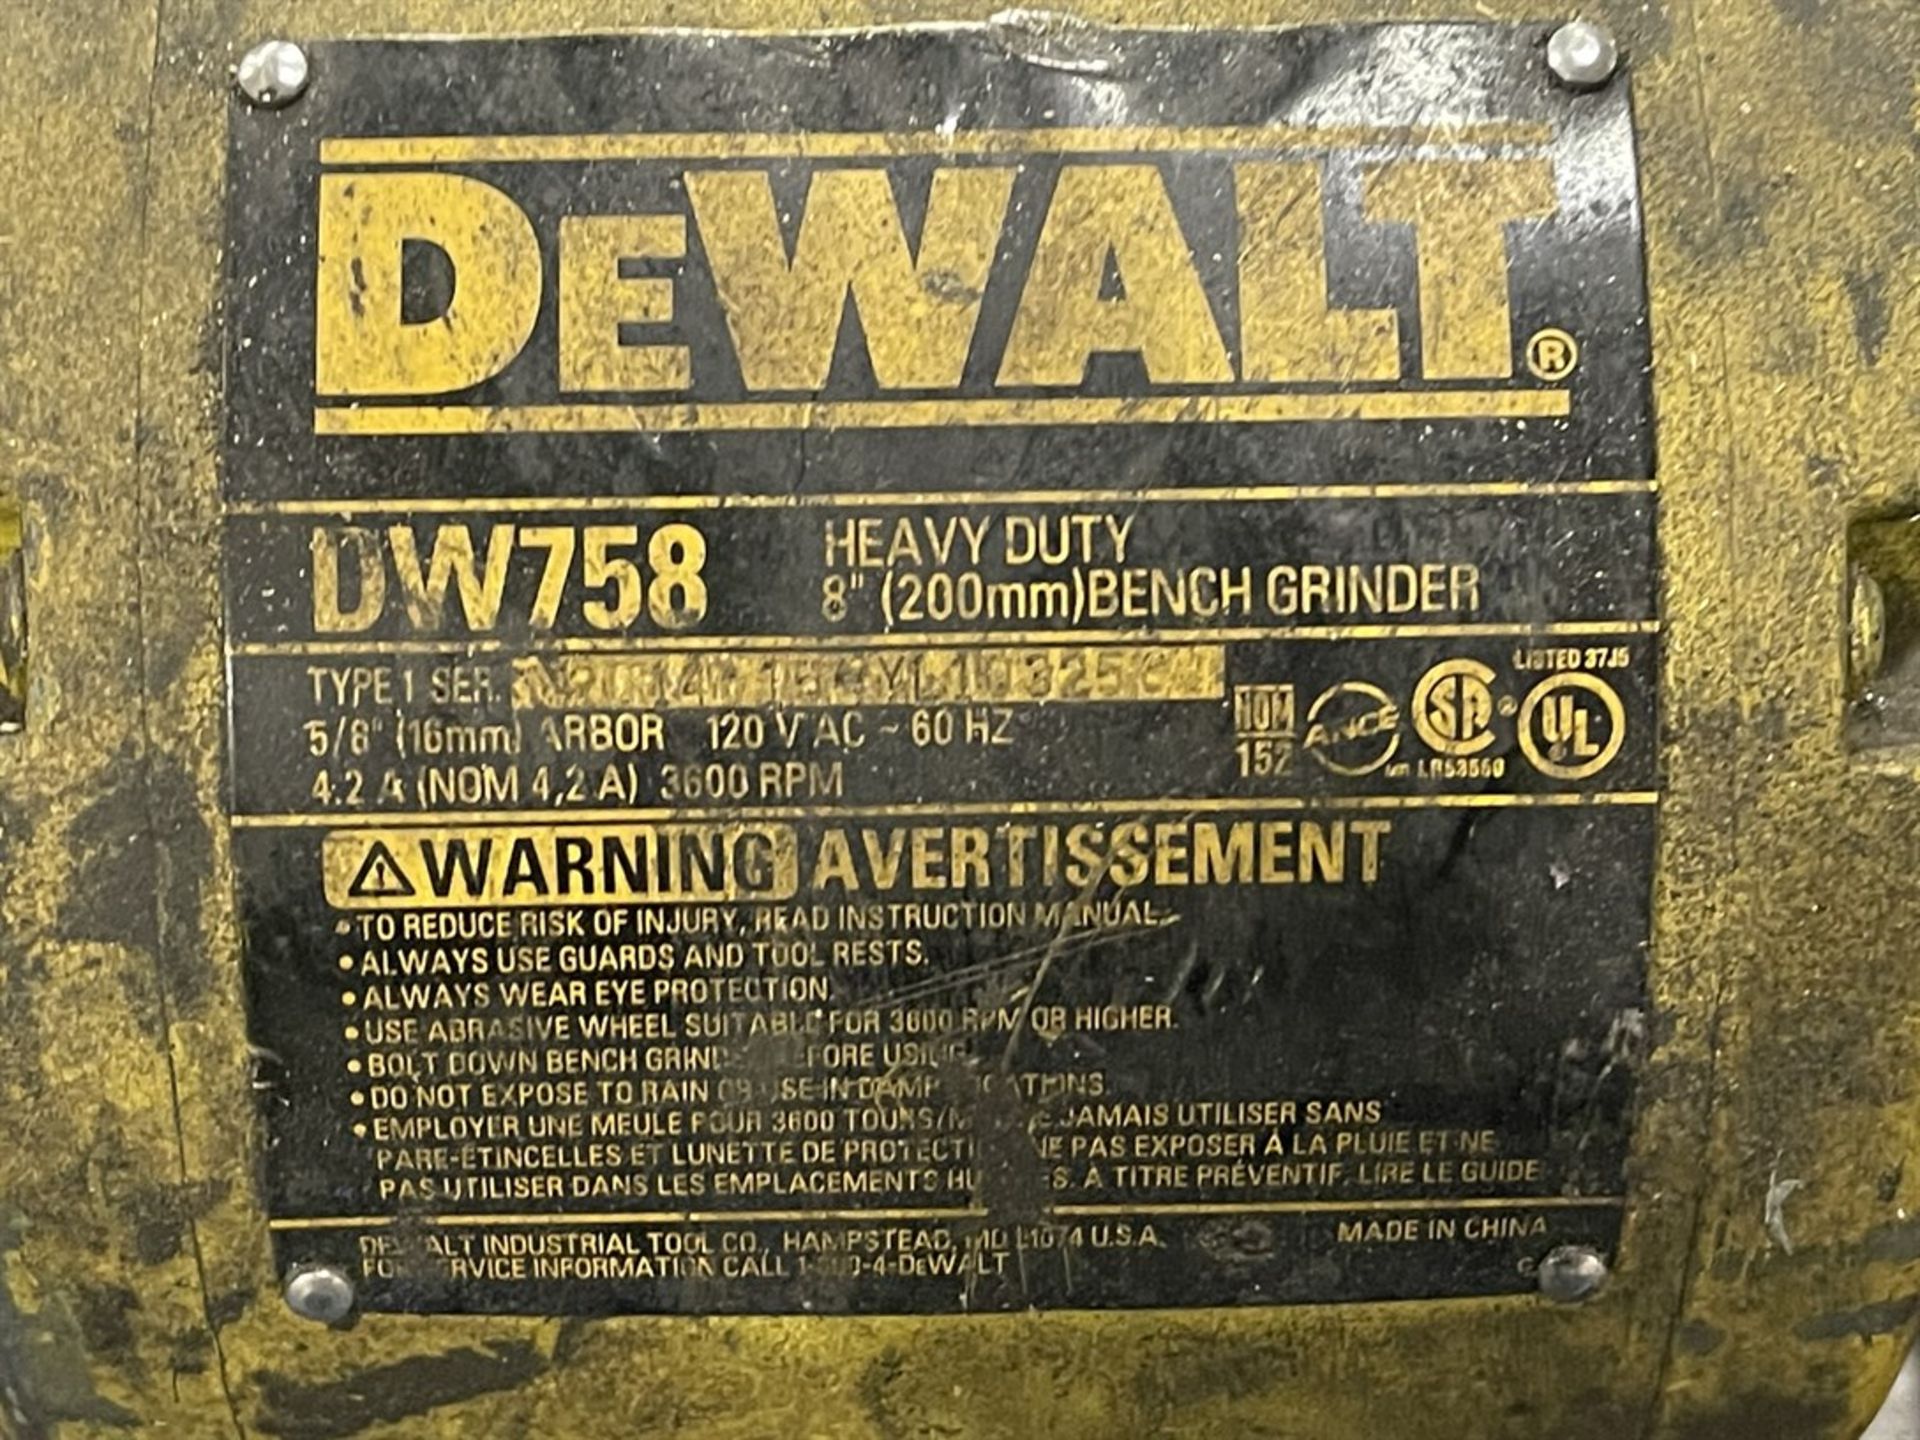 DEWALT DW758 Heavy Duty 8" Bench Grinder - Image 3 of 3